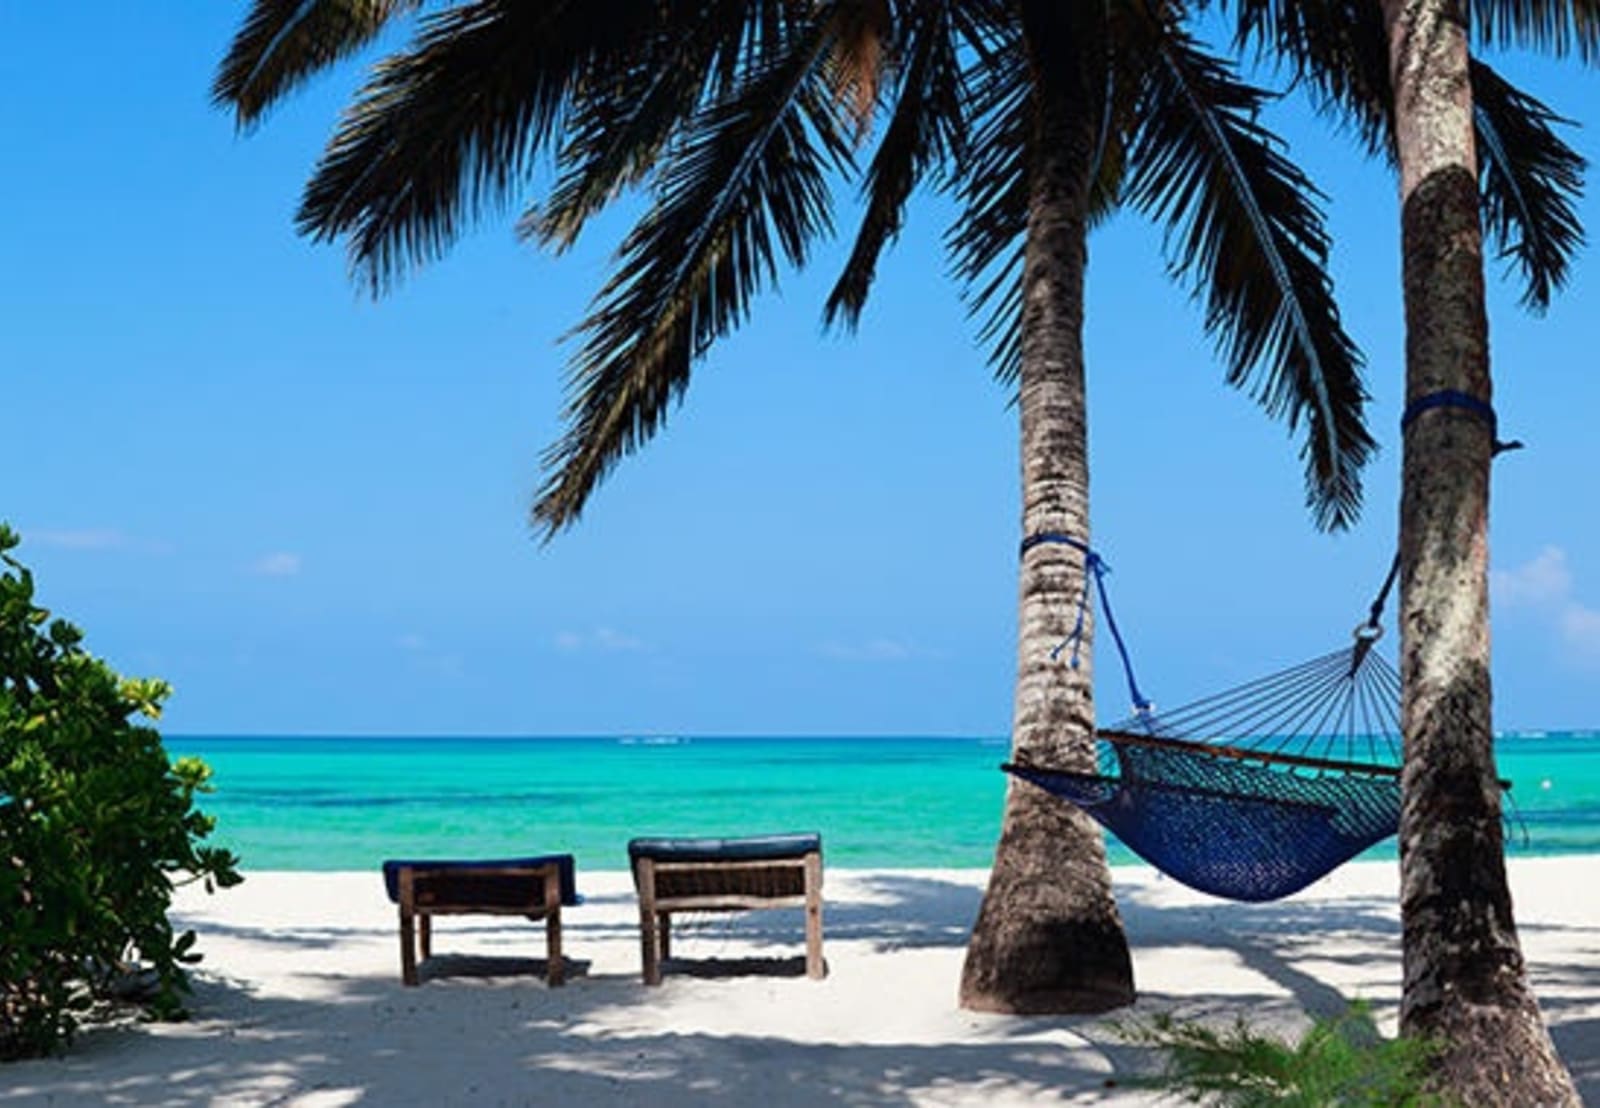 3a-Perfect-tropical-beach-of-Zanzibar-island-with-palm-trees-sunbeds-and-hammock.jpg